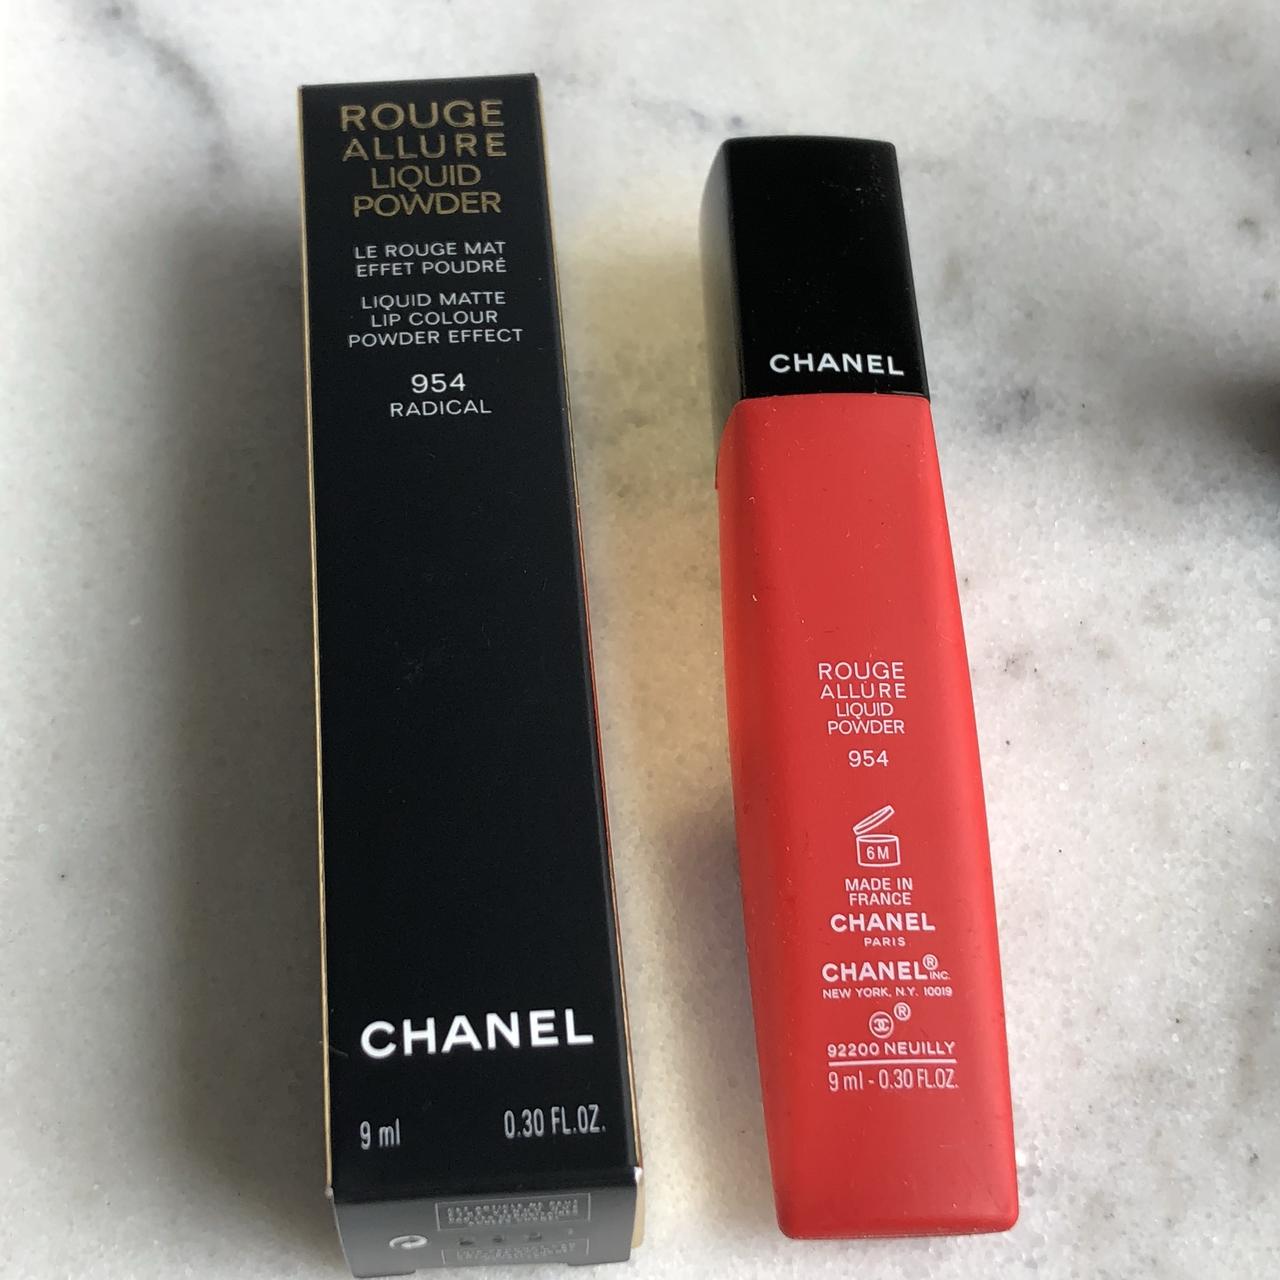 Chanel rouge allure liquid powder 954 “Radical”, - Depop